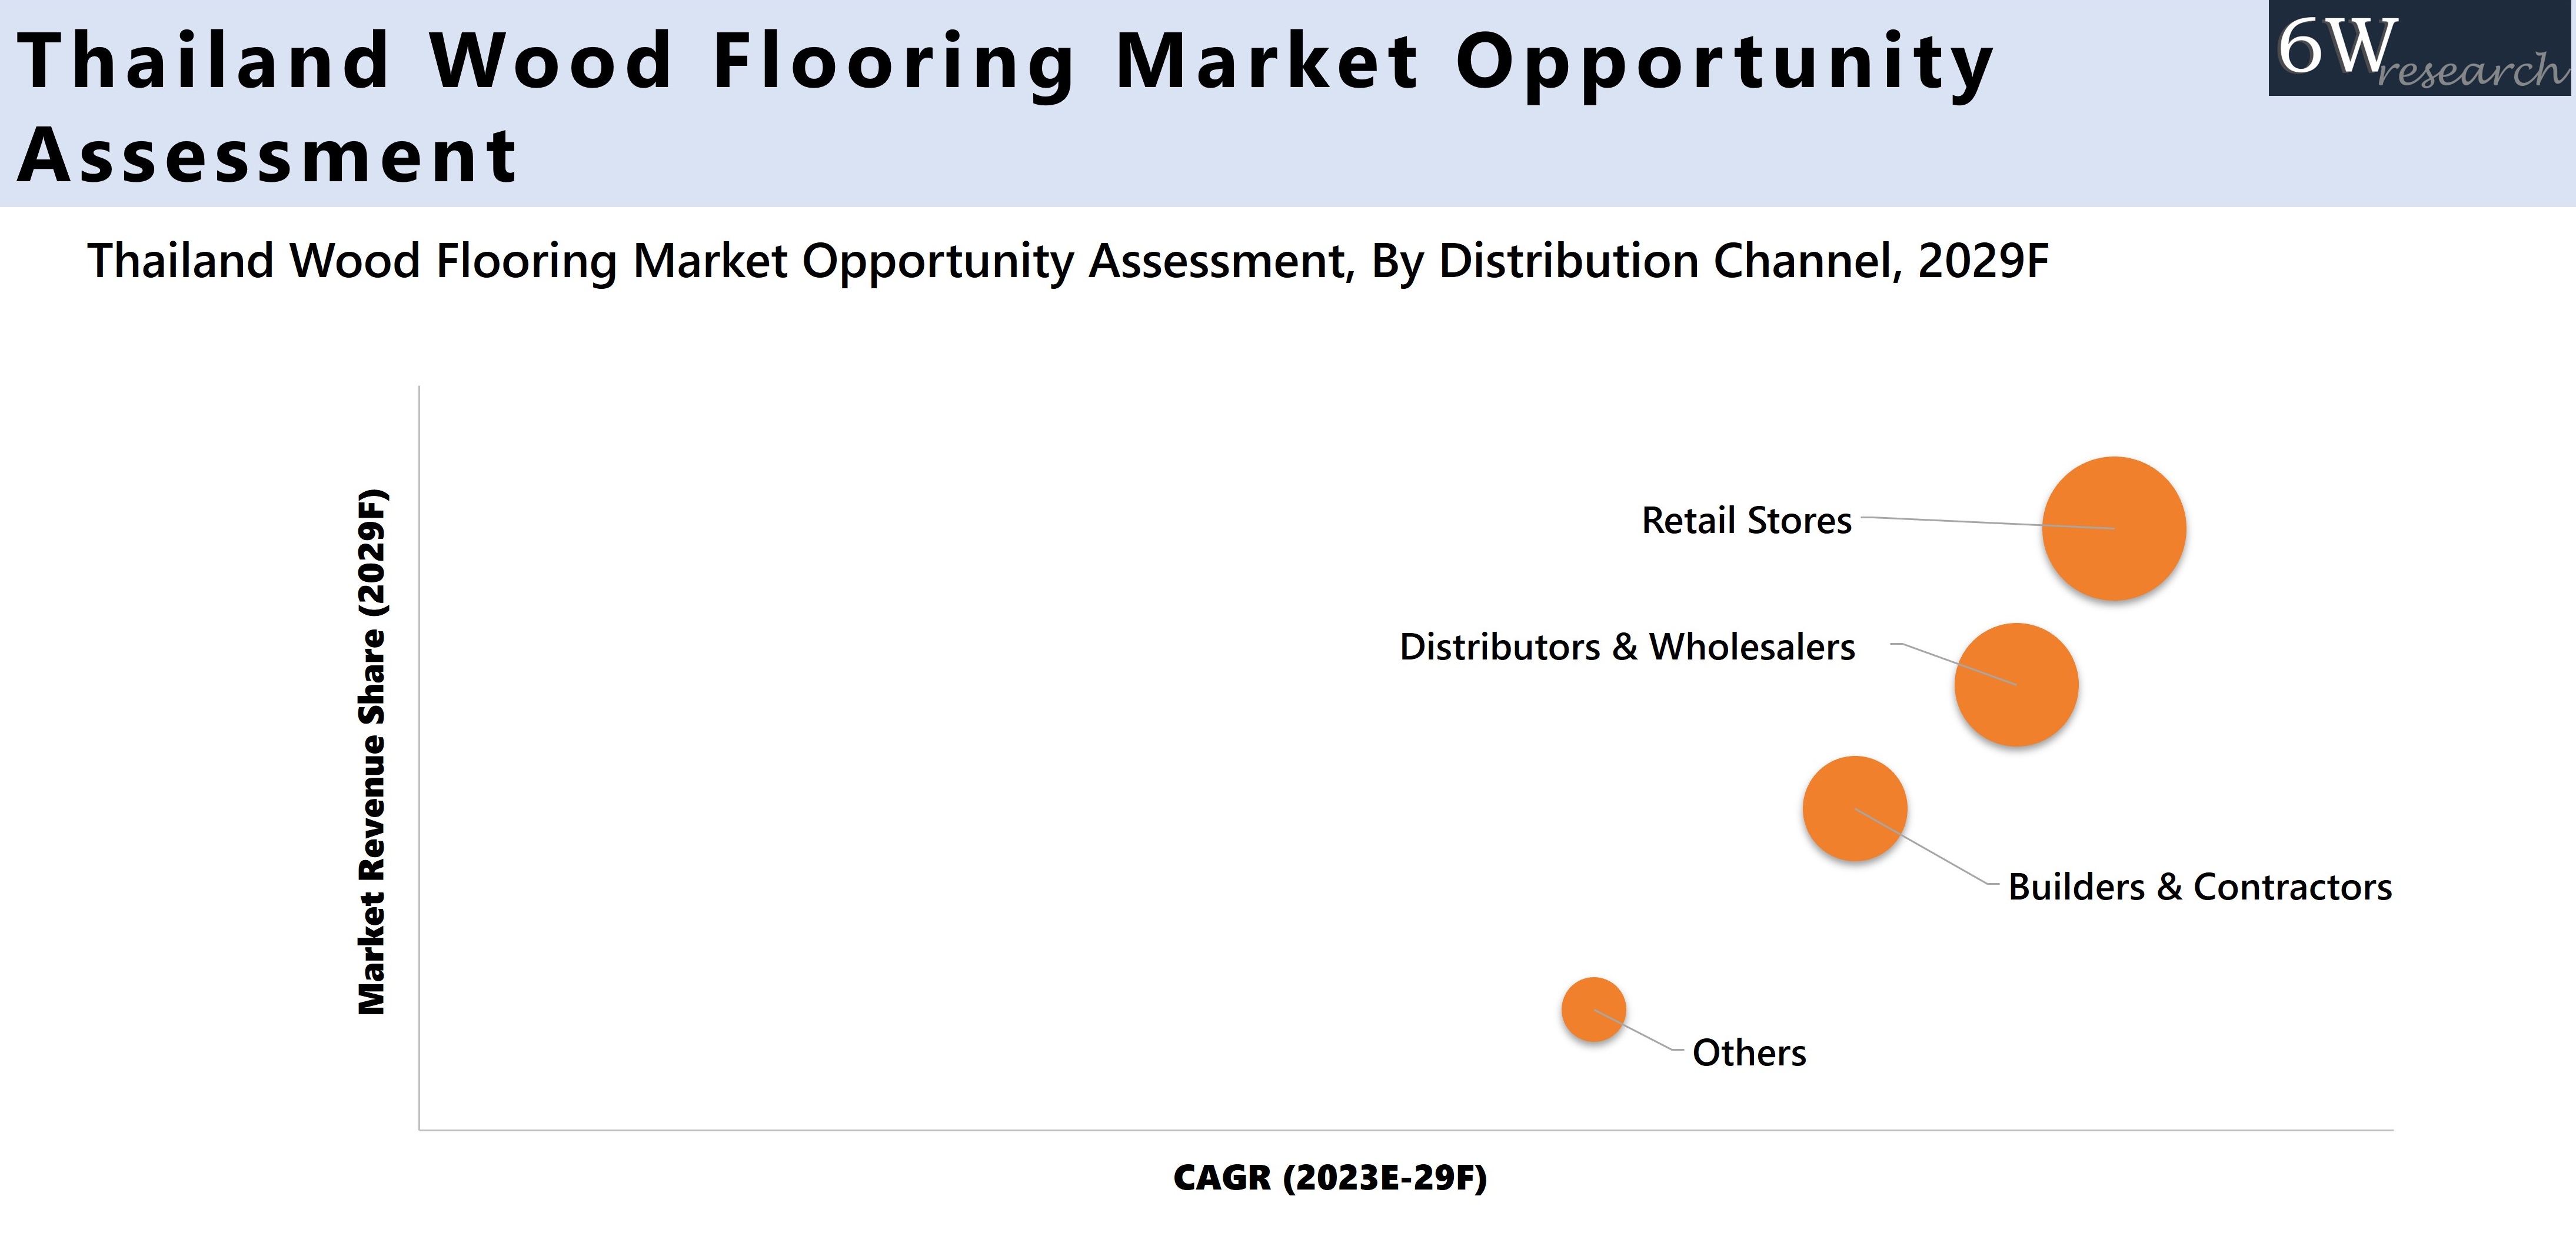 Thailand Wood Flooring Market Opportunity Assessment